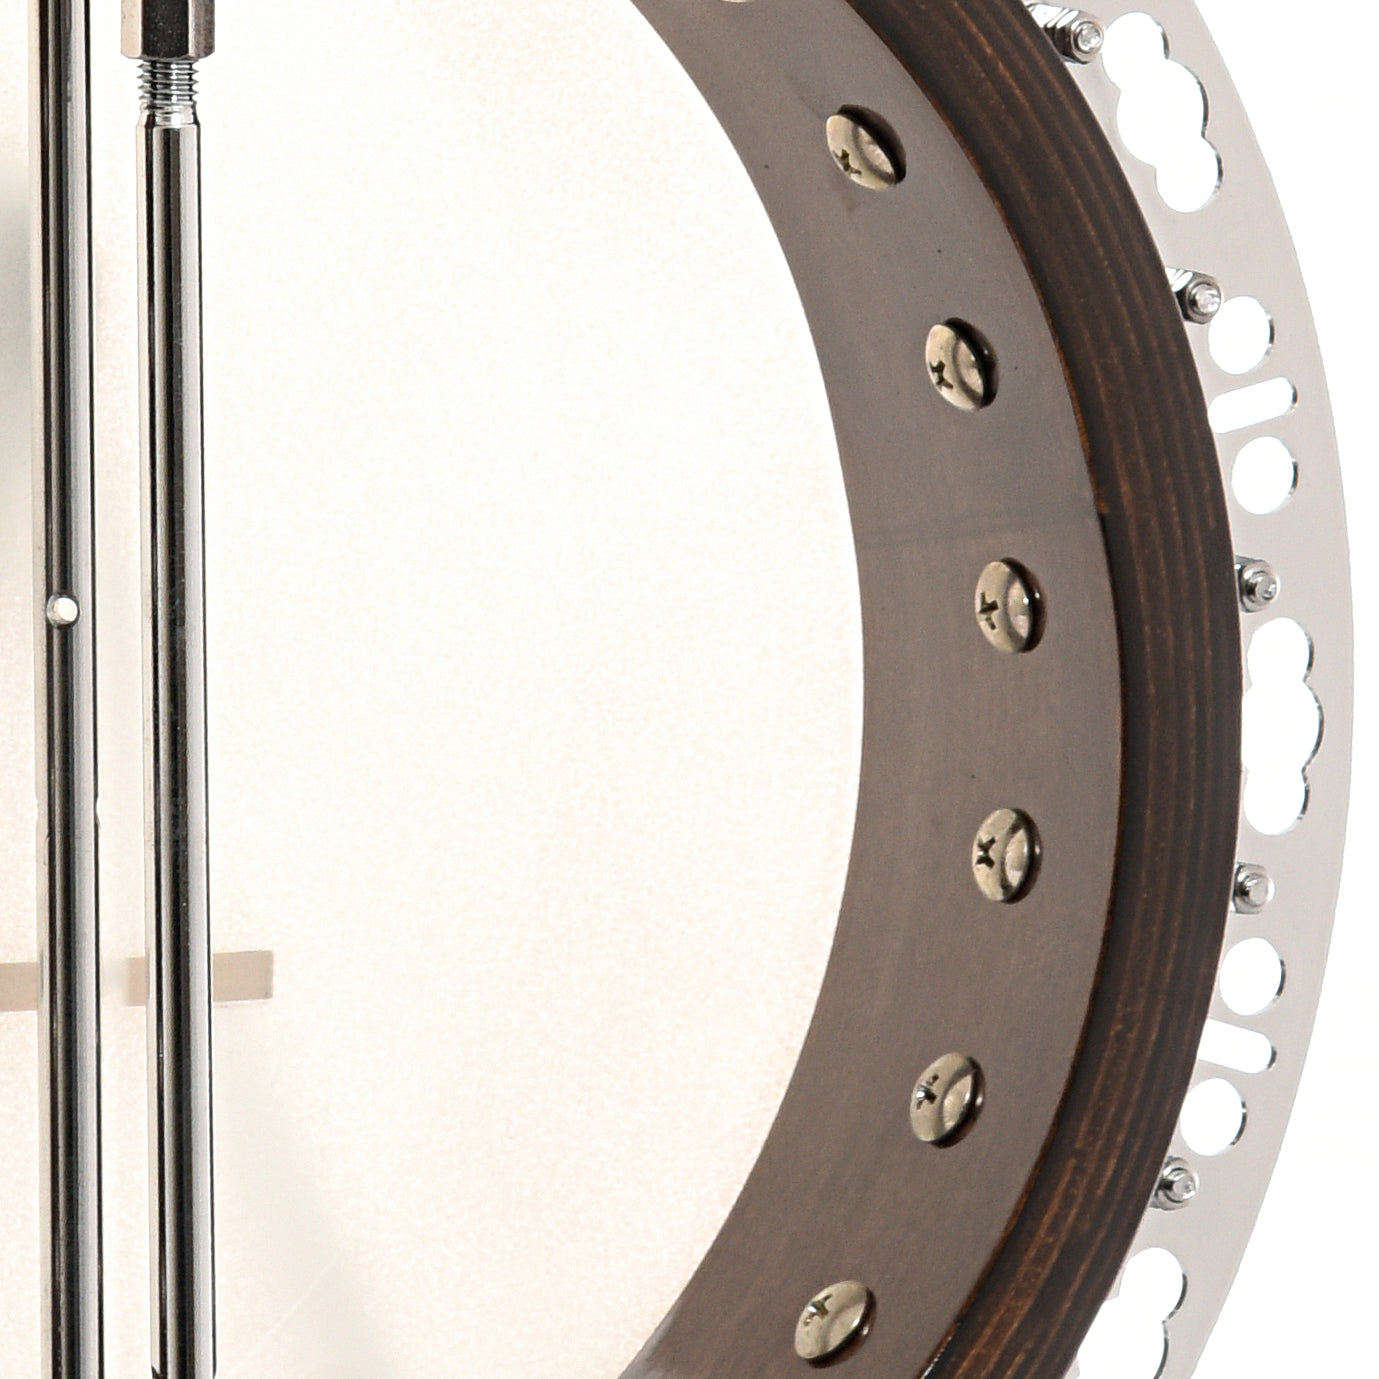 Inside rim of Gold Tone BG-150F Resonator Banjo